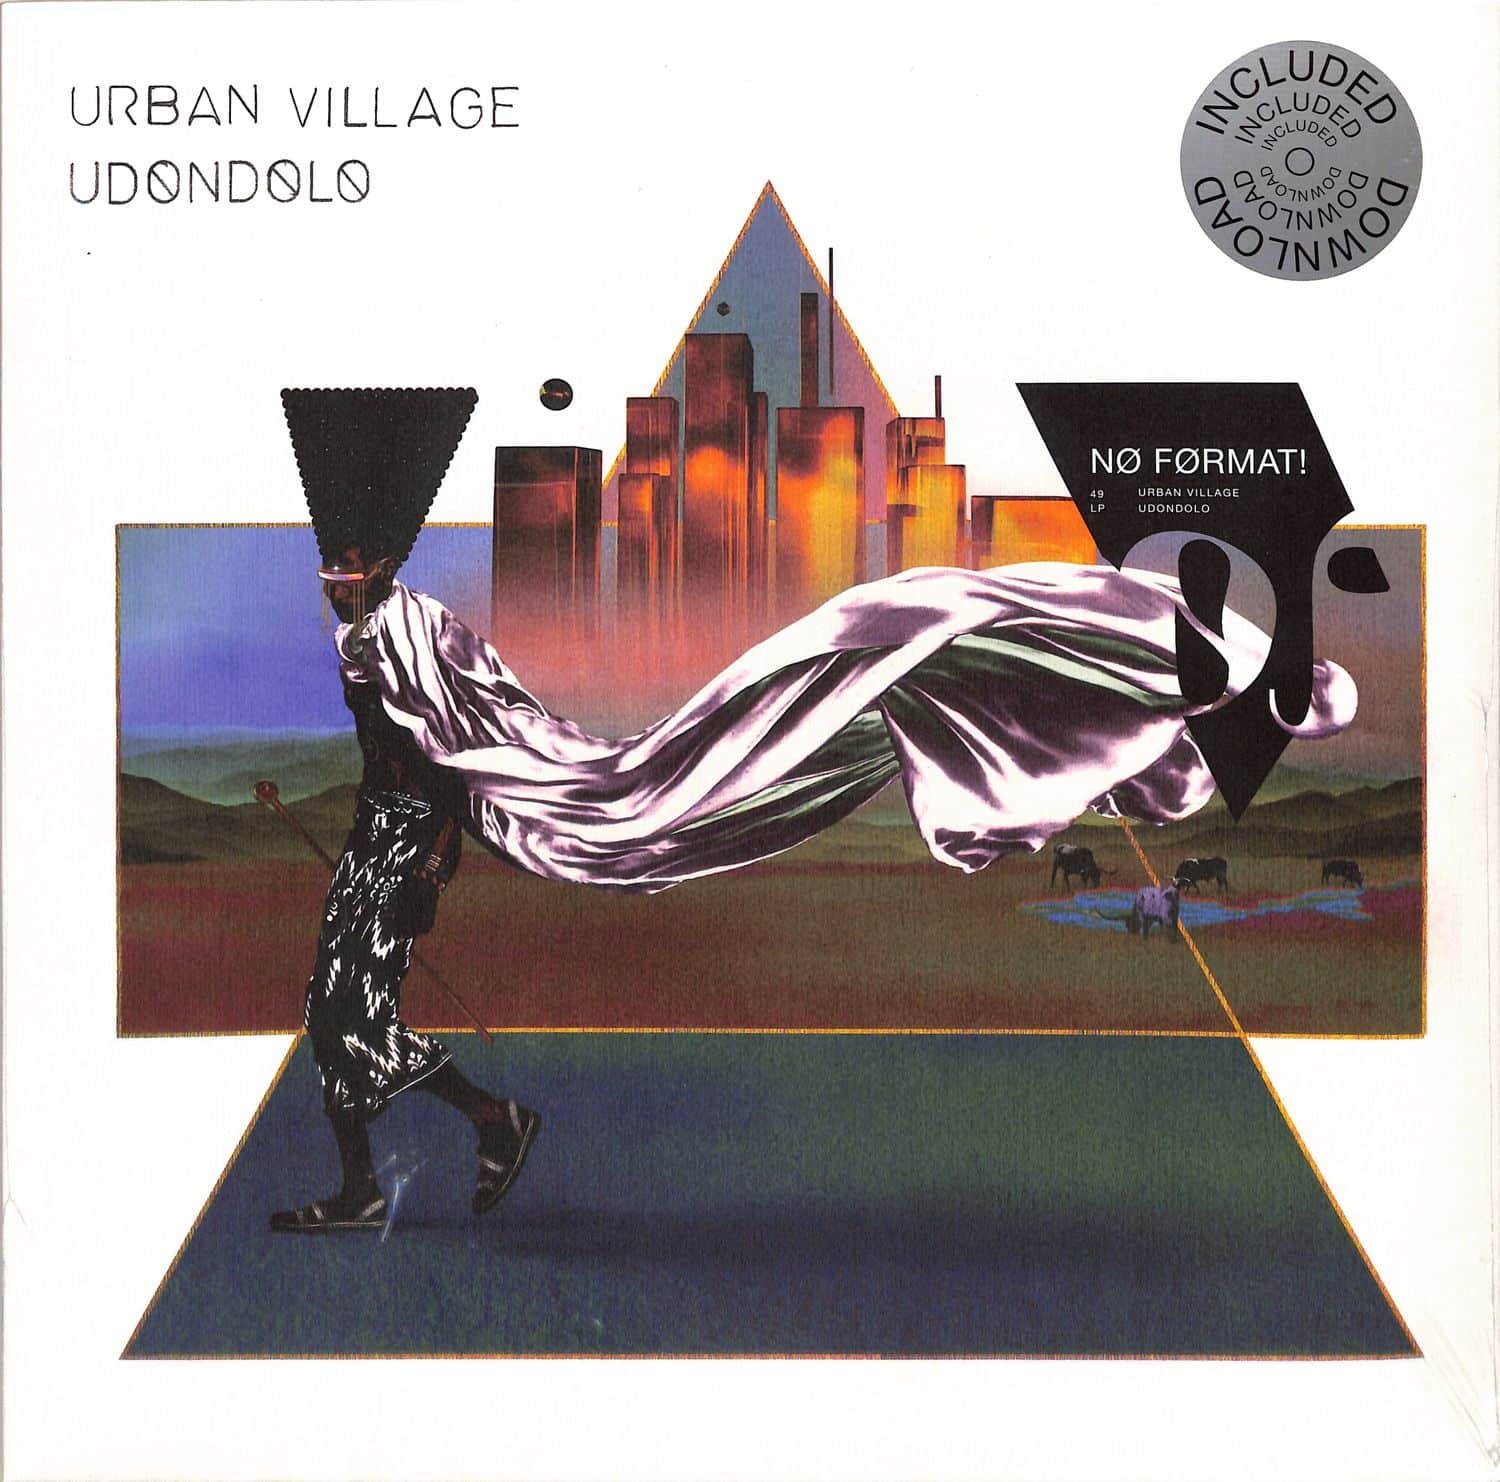 Urban Village - UDONGOLO 